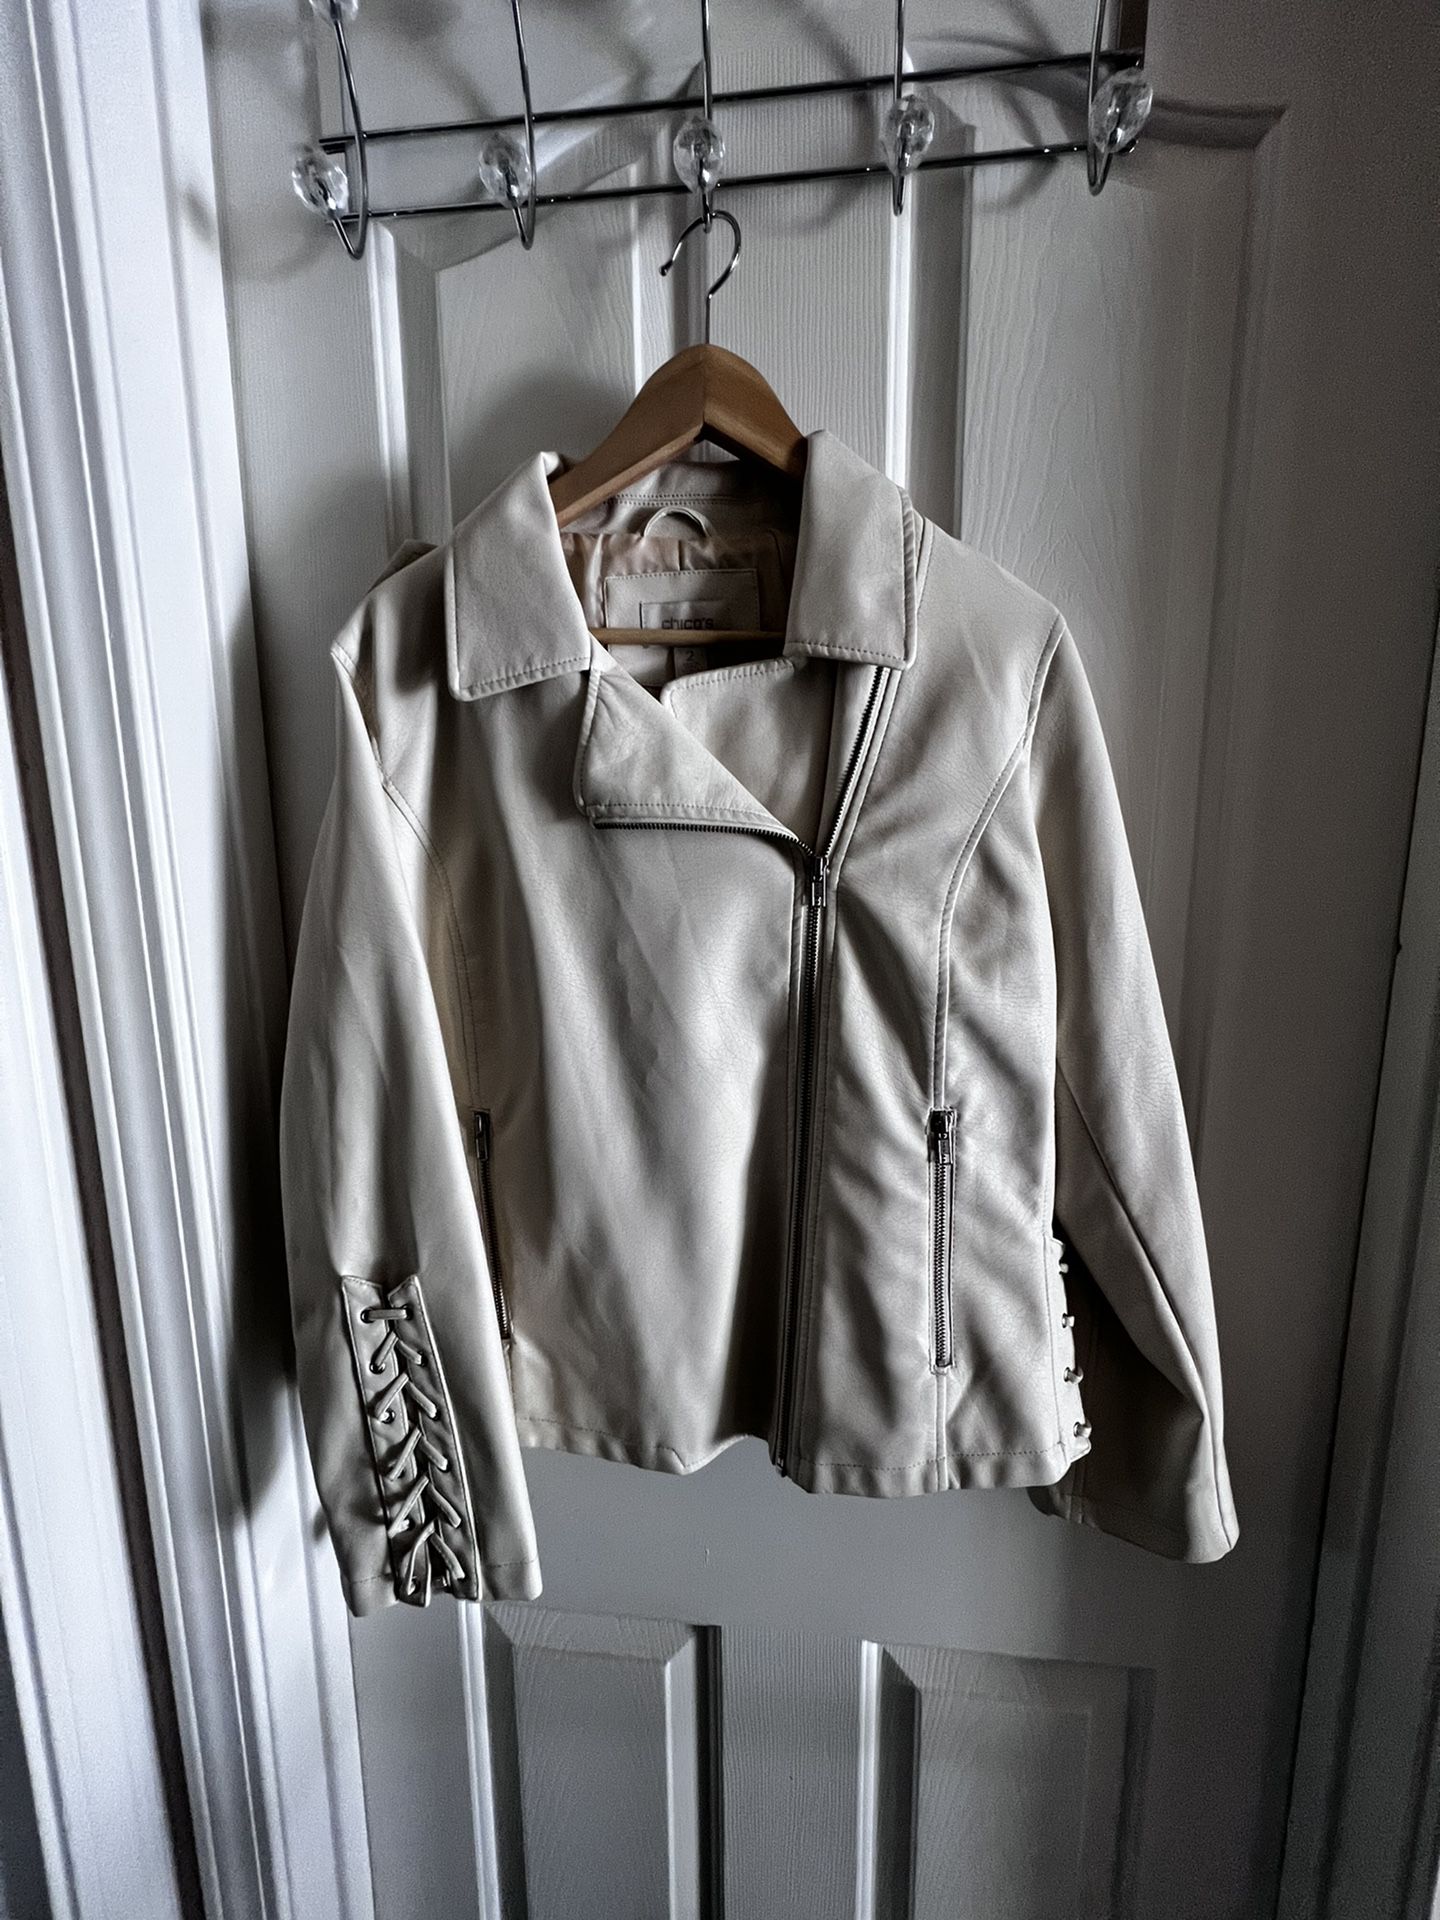 Brand-new white leather jacket 